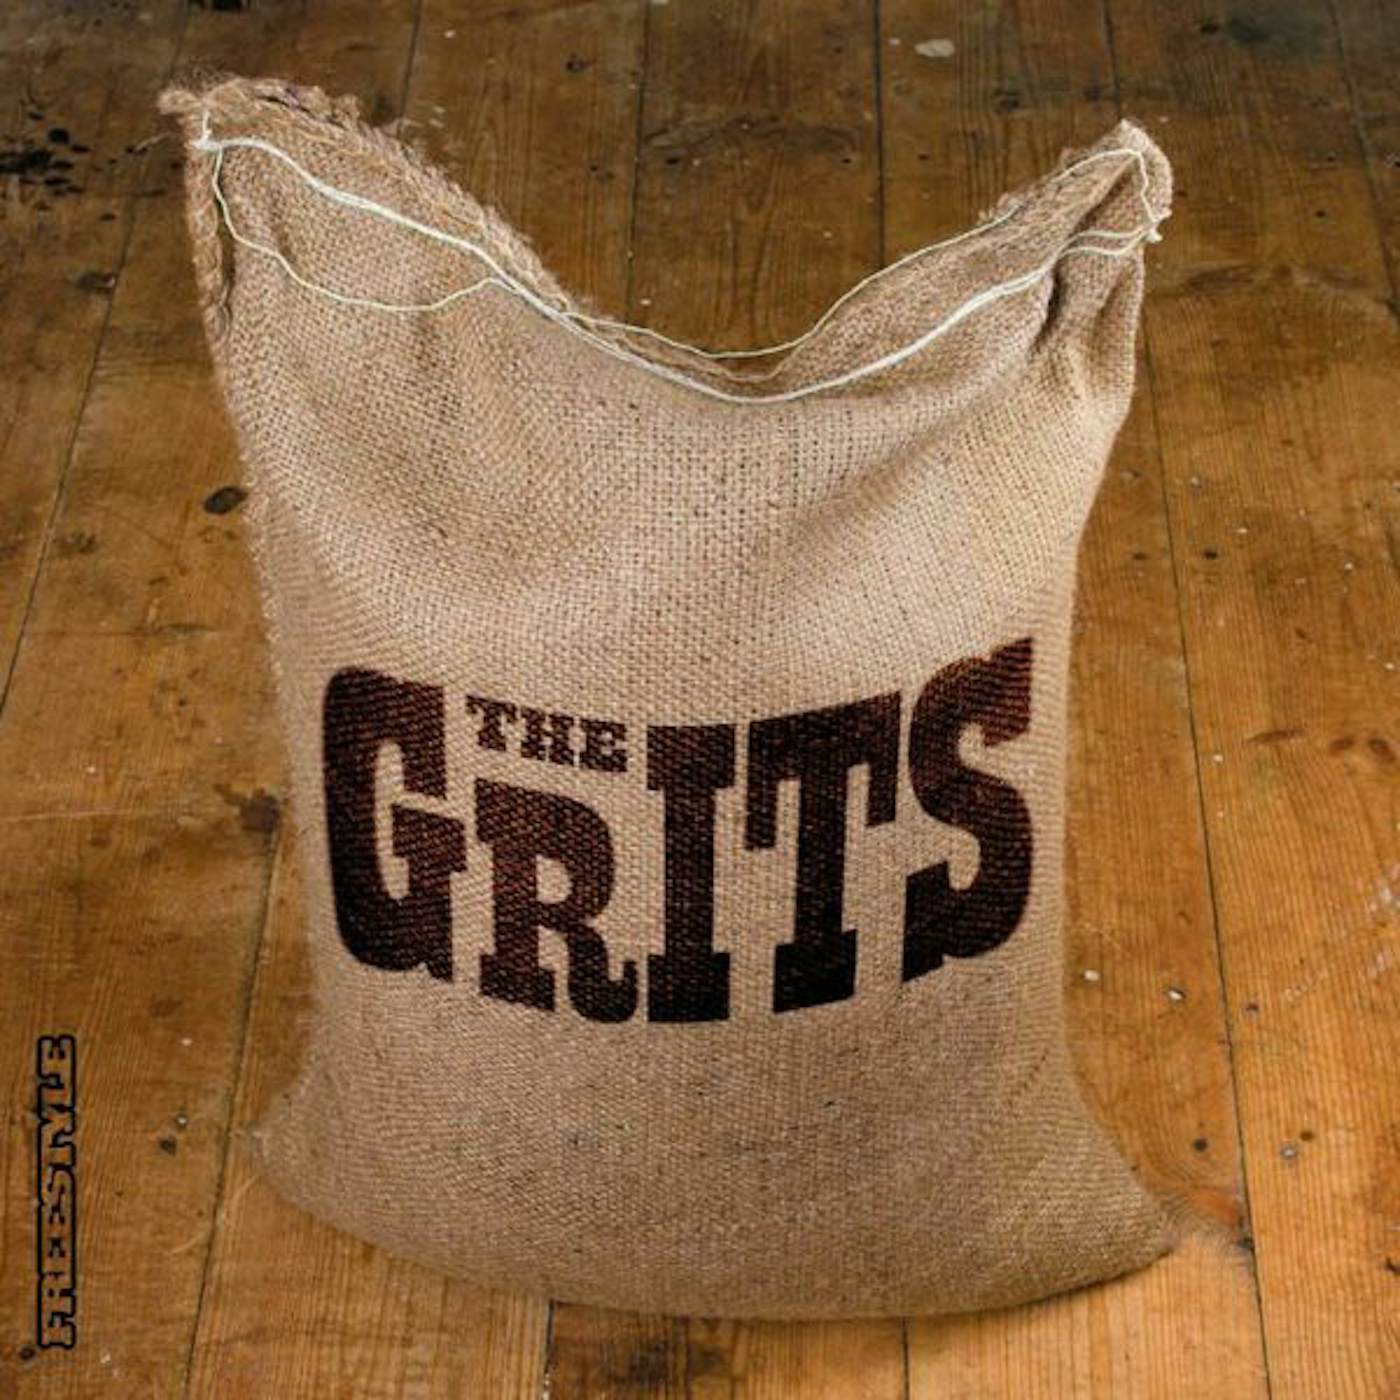 Grits BOOM BOOM Vinyl Record - UK Release